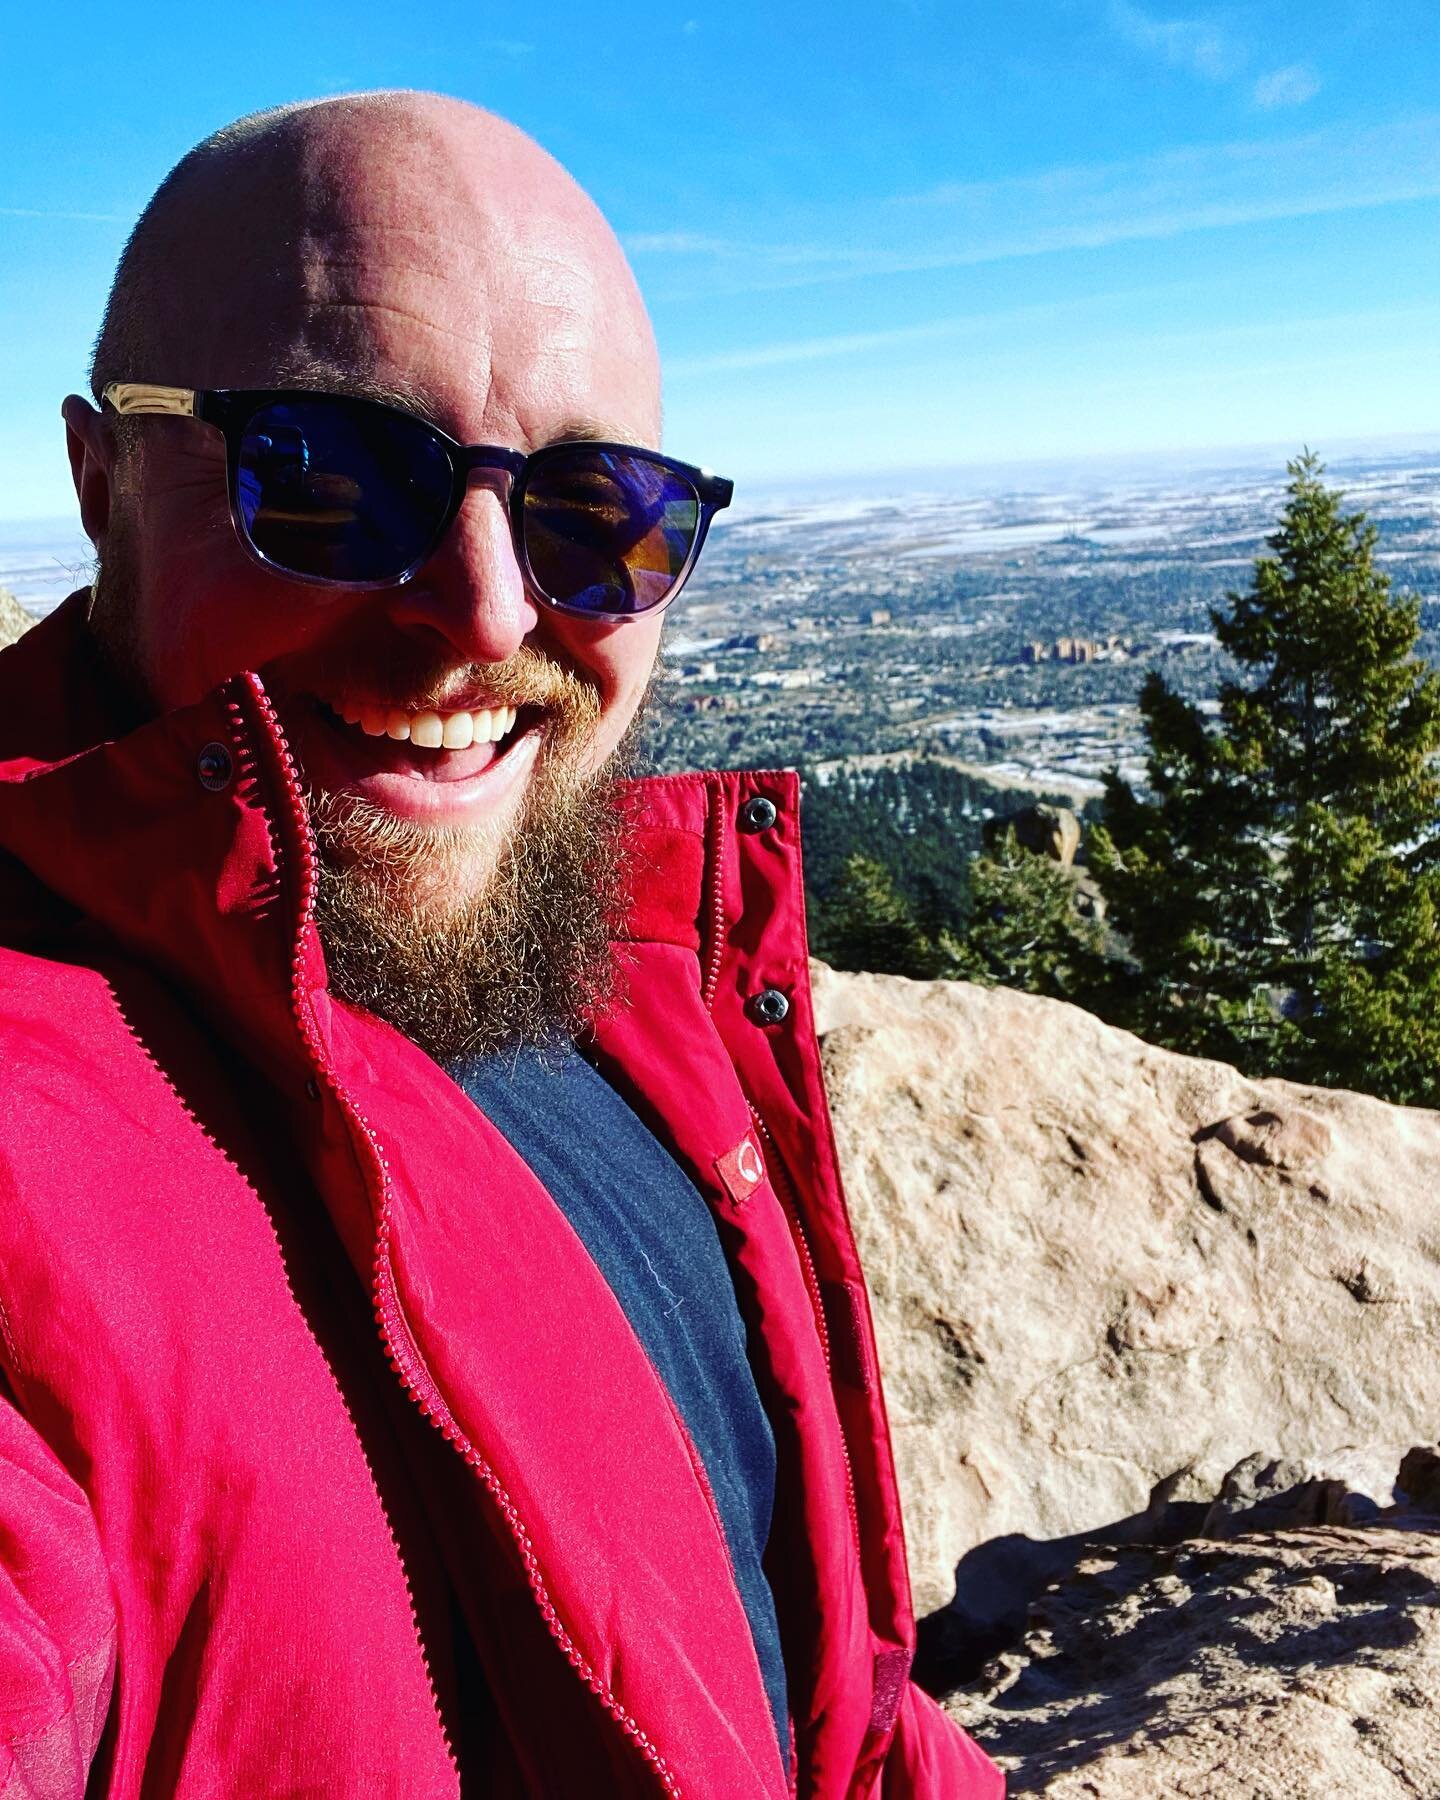 Colorado, you&rsquo;re always such a sweet escape.

#GetOutside
#Adventures
#Boulder
#Denver
#Hiking
#Mountains
#RoyalArchTrail
#MeowWolf